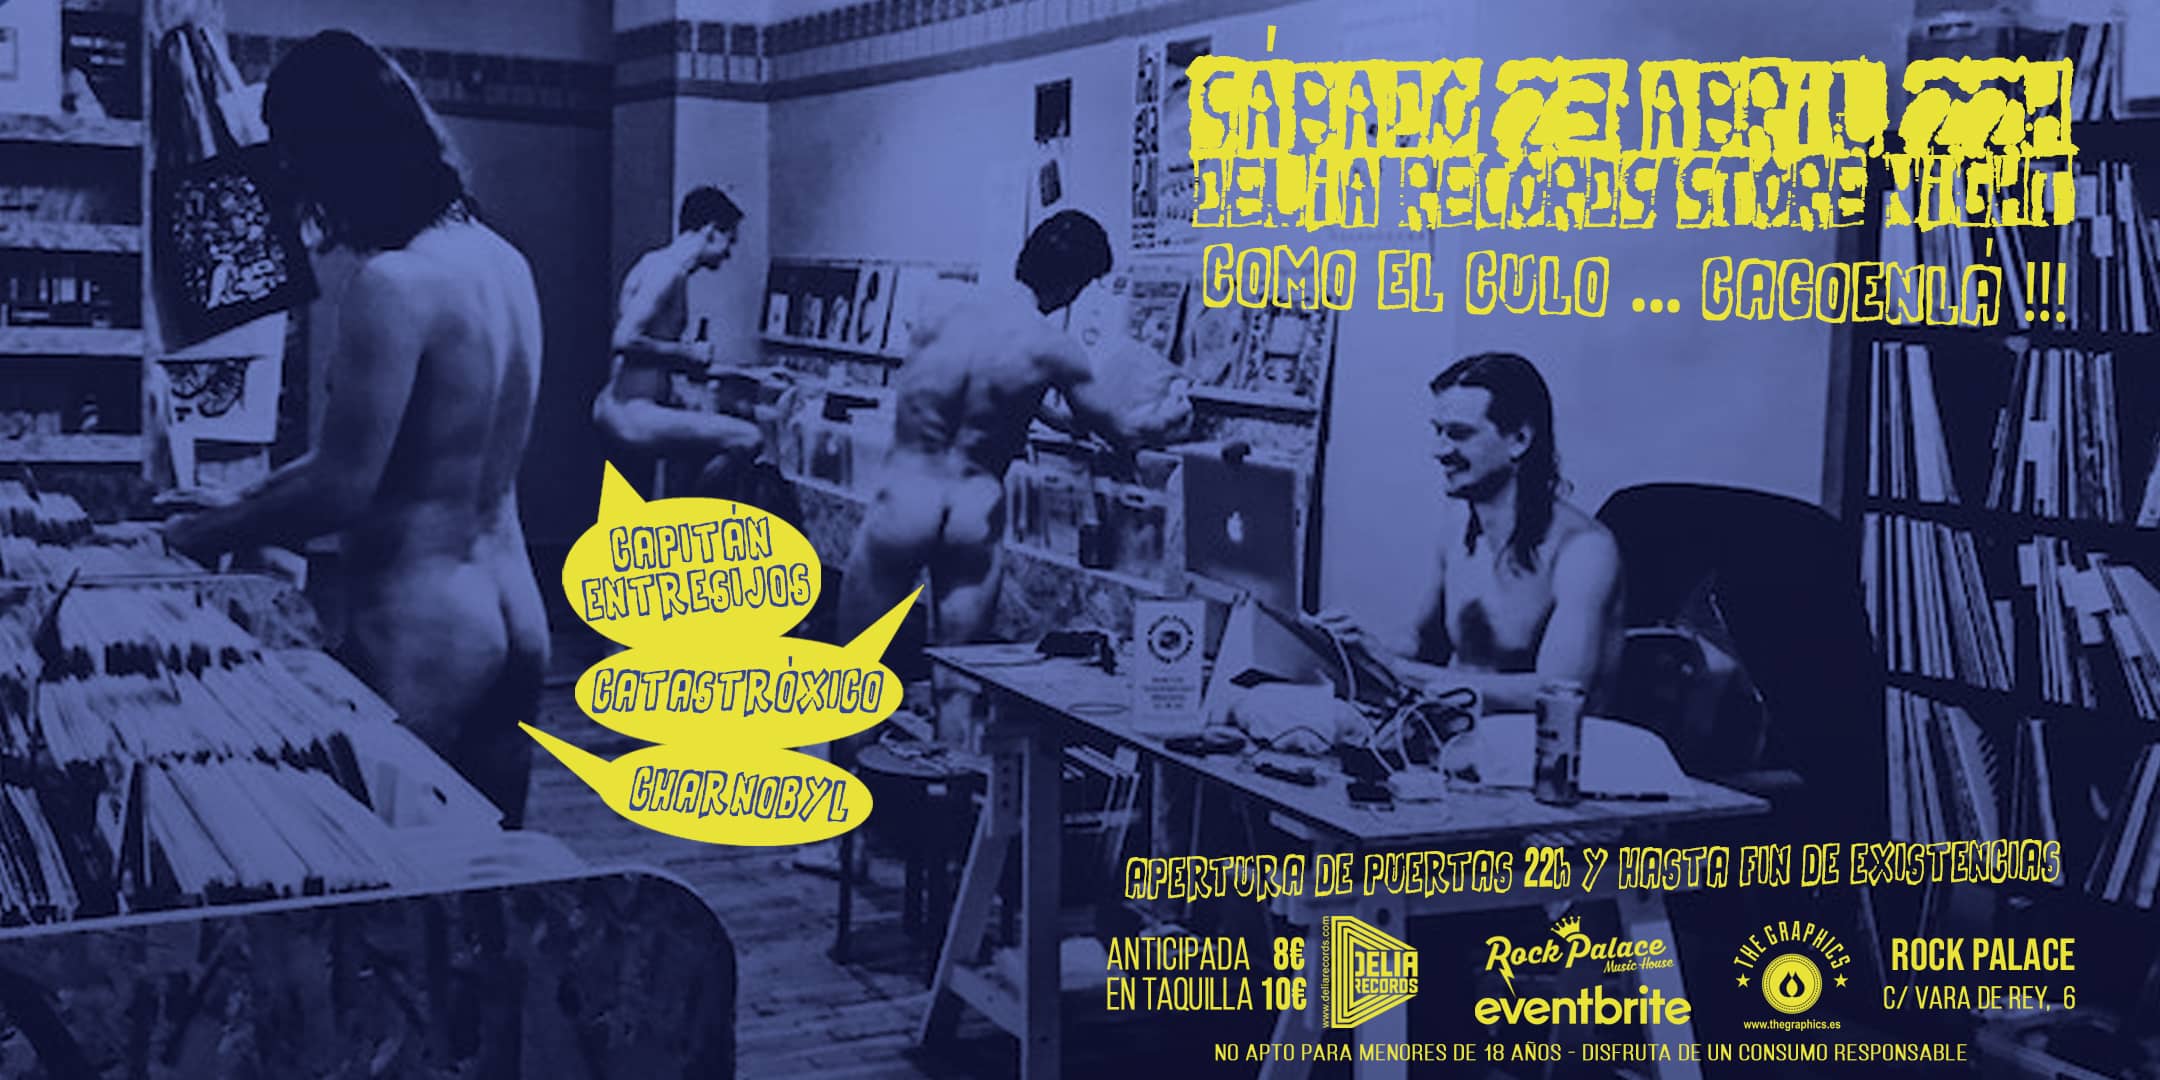 Fiesta DELIA RECORDS STORE NIGHT [Madrid @ Rock Palace] Capitán Entresijos + Catastróxico + Charnobyl